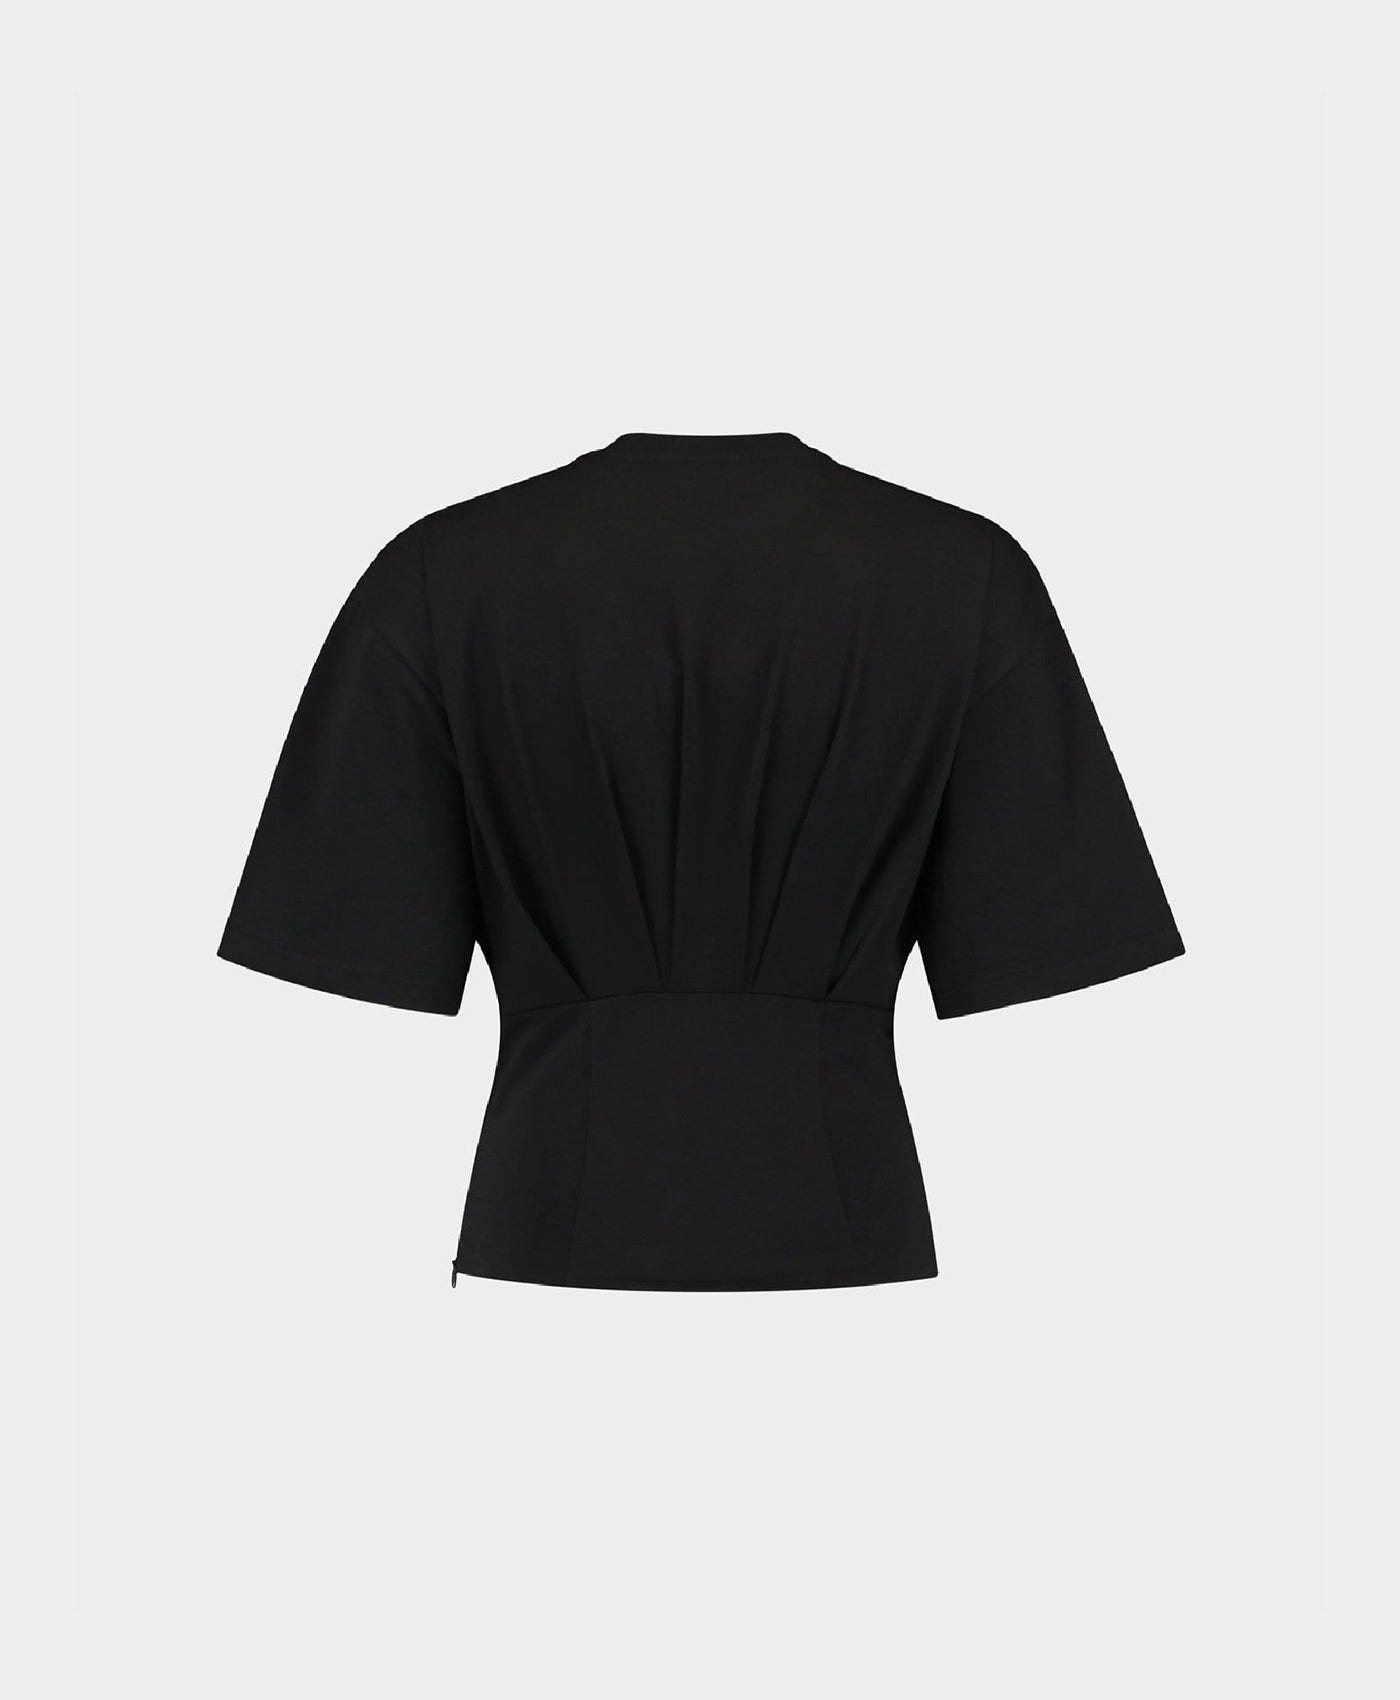 DP - Black Mody T-Shirt  - Packshot - Rear